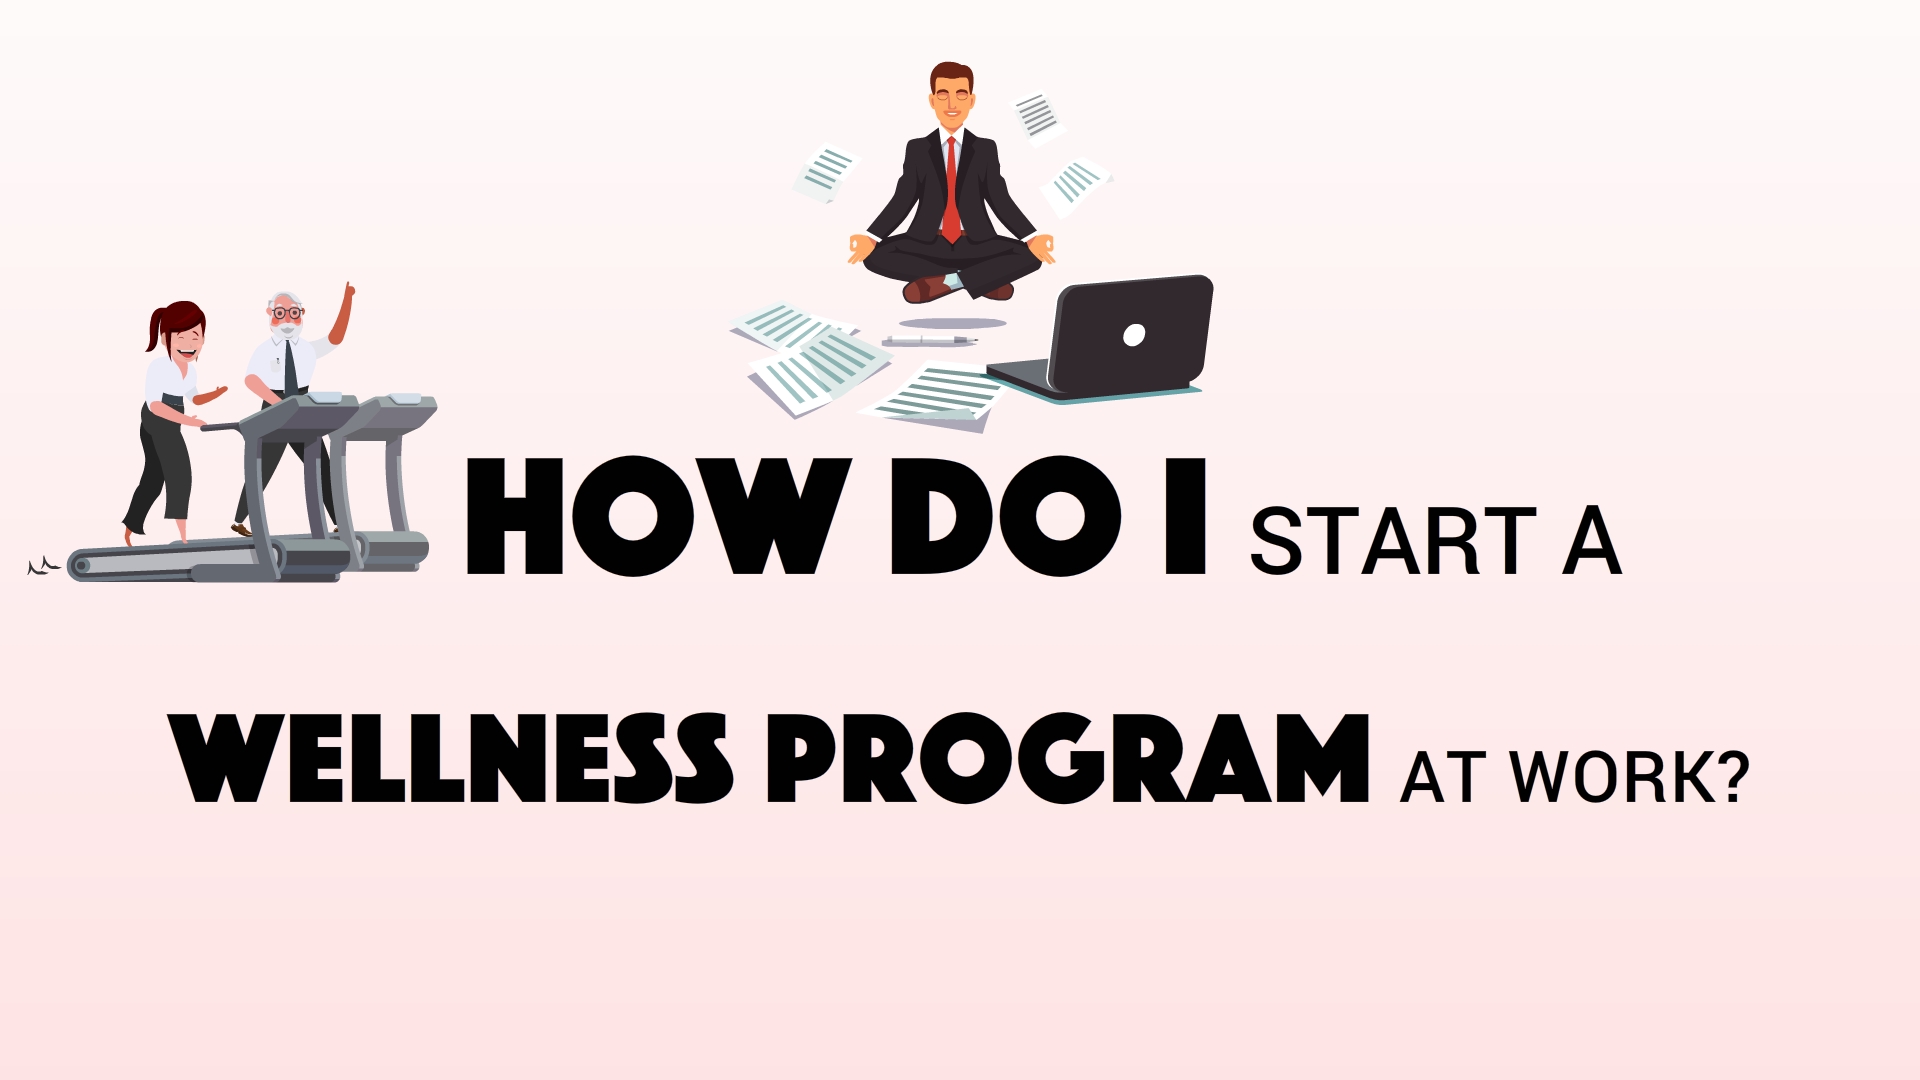 How-to-start-a-wellness-program-at-work